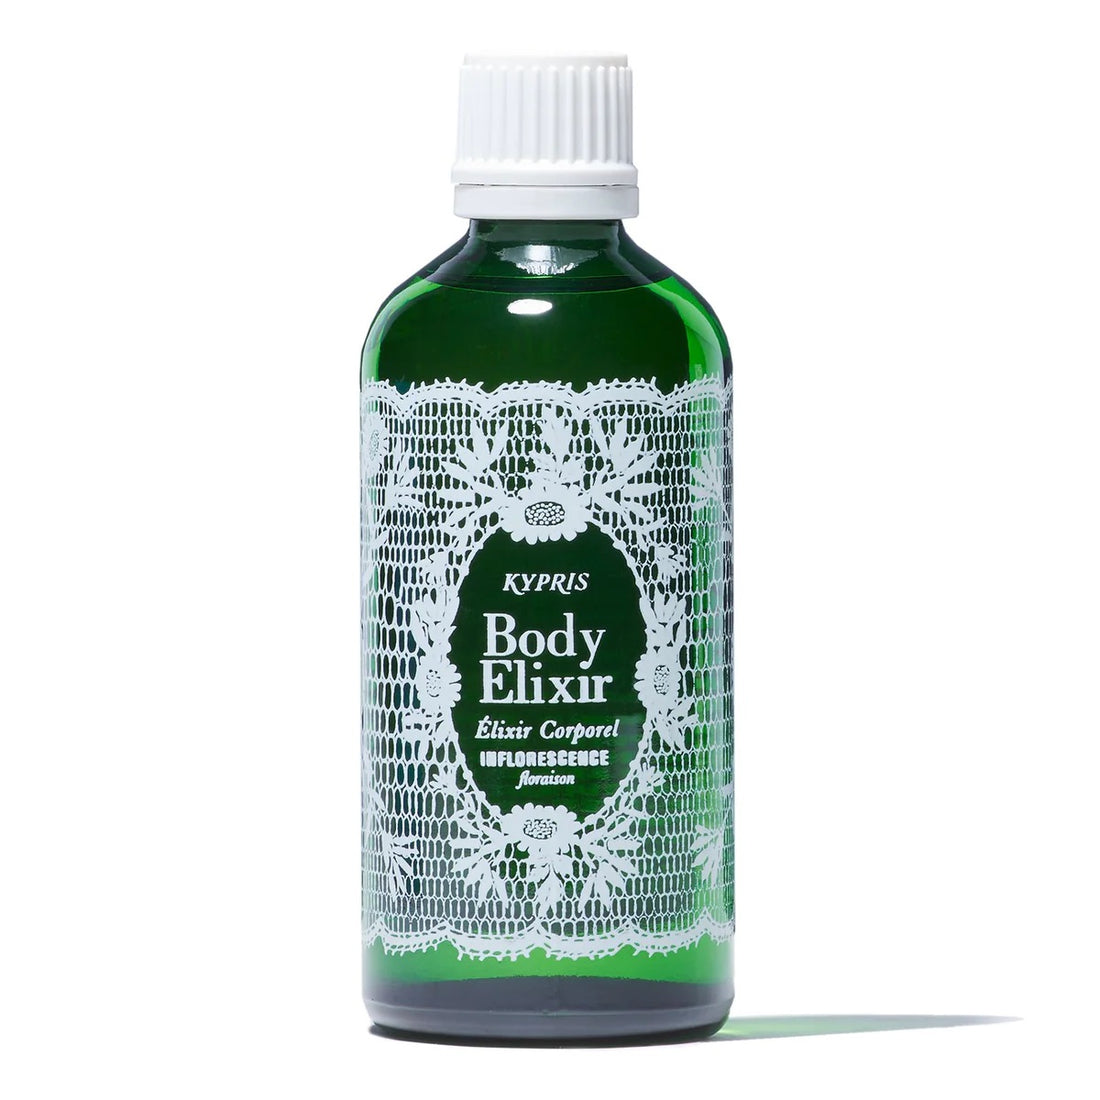 Kypris Body Elixir